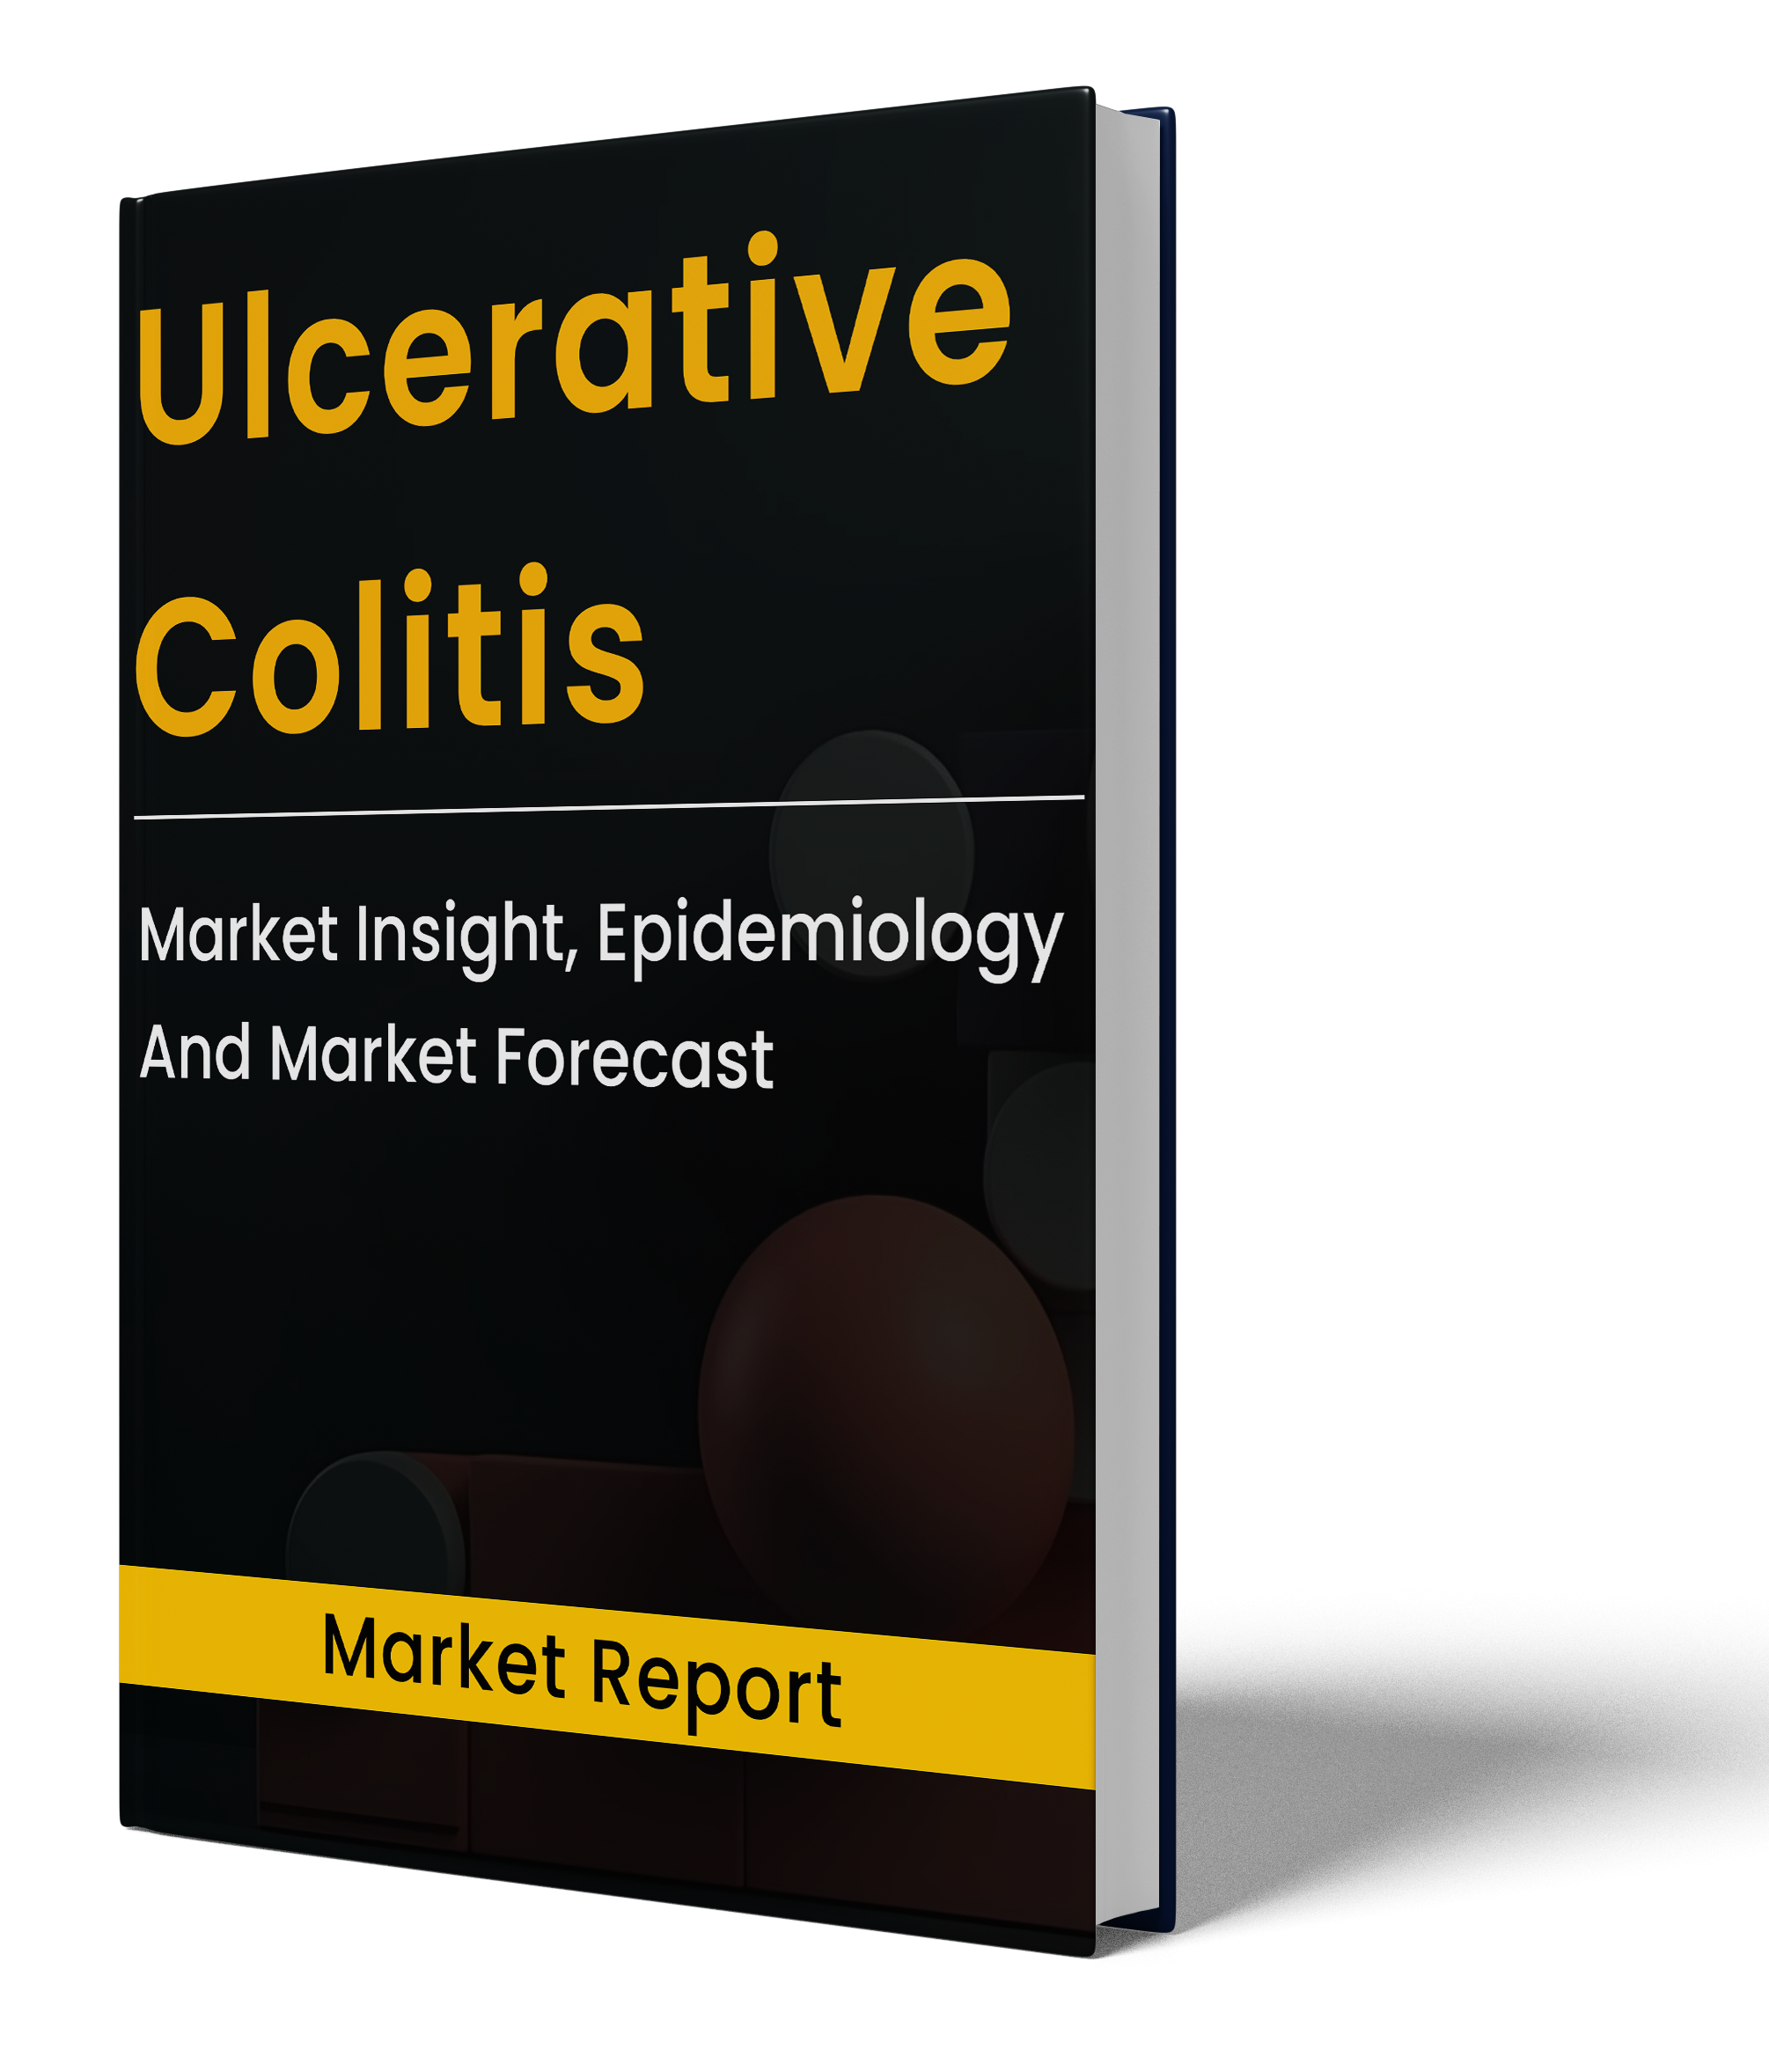 Ulcerative Colitis Market Forecast Report